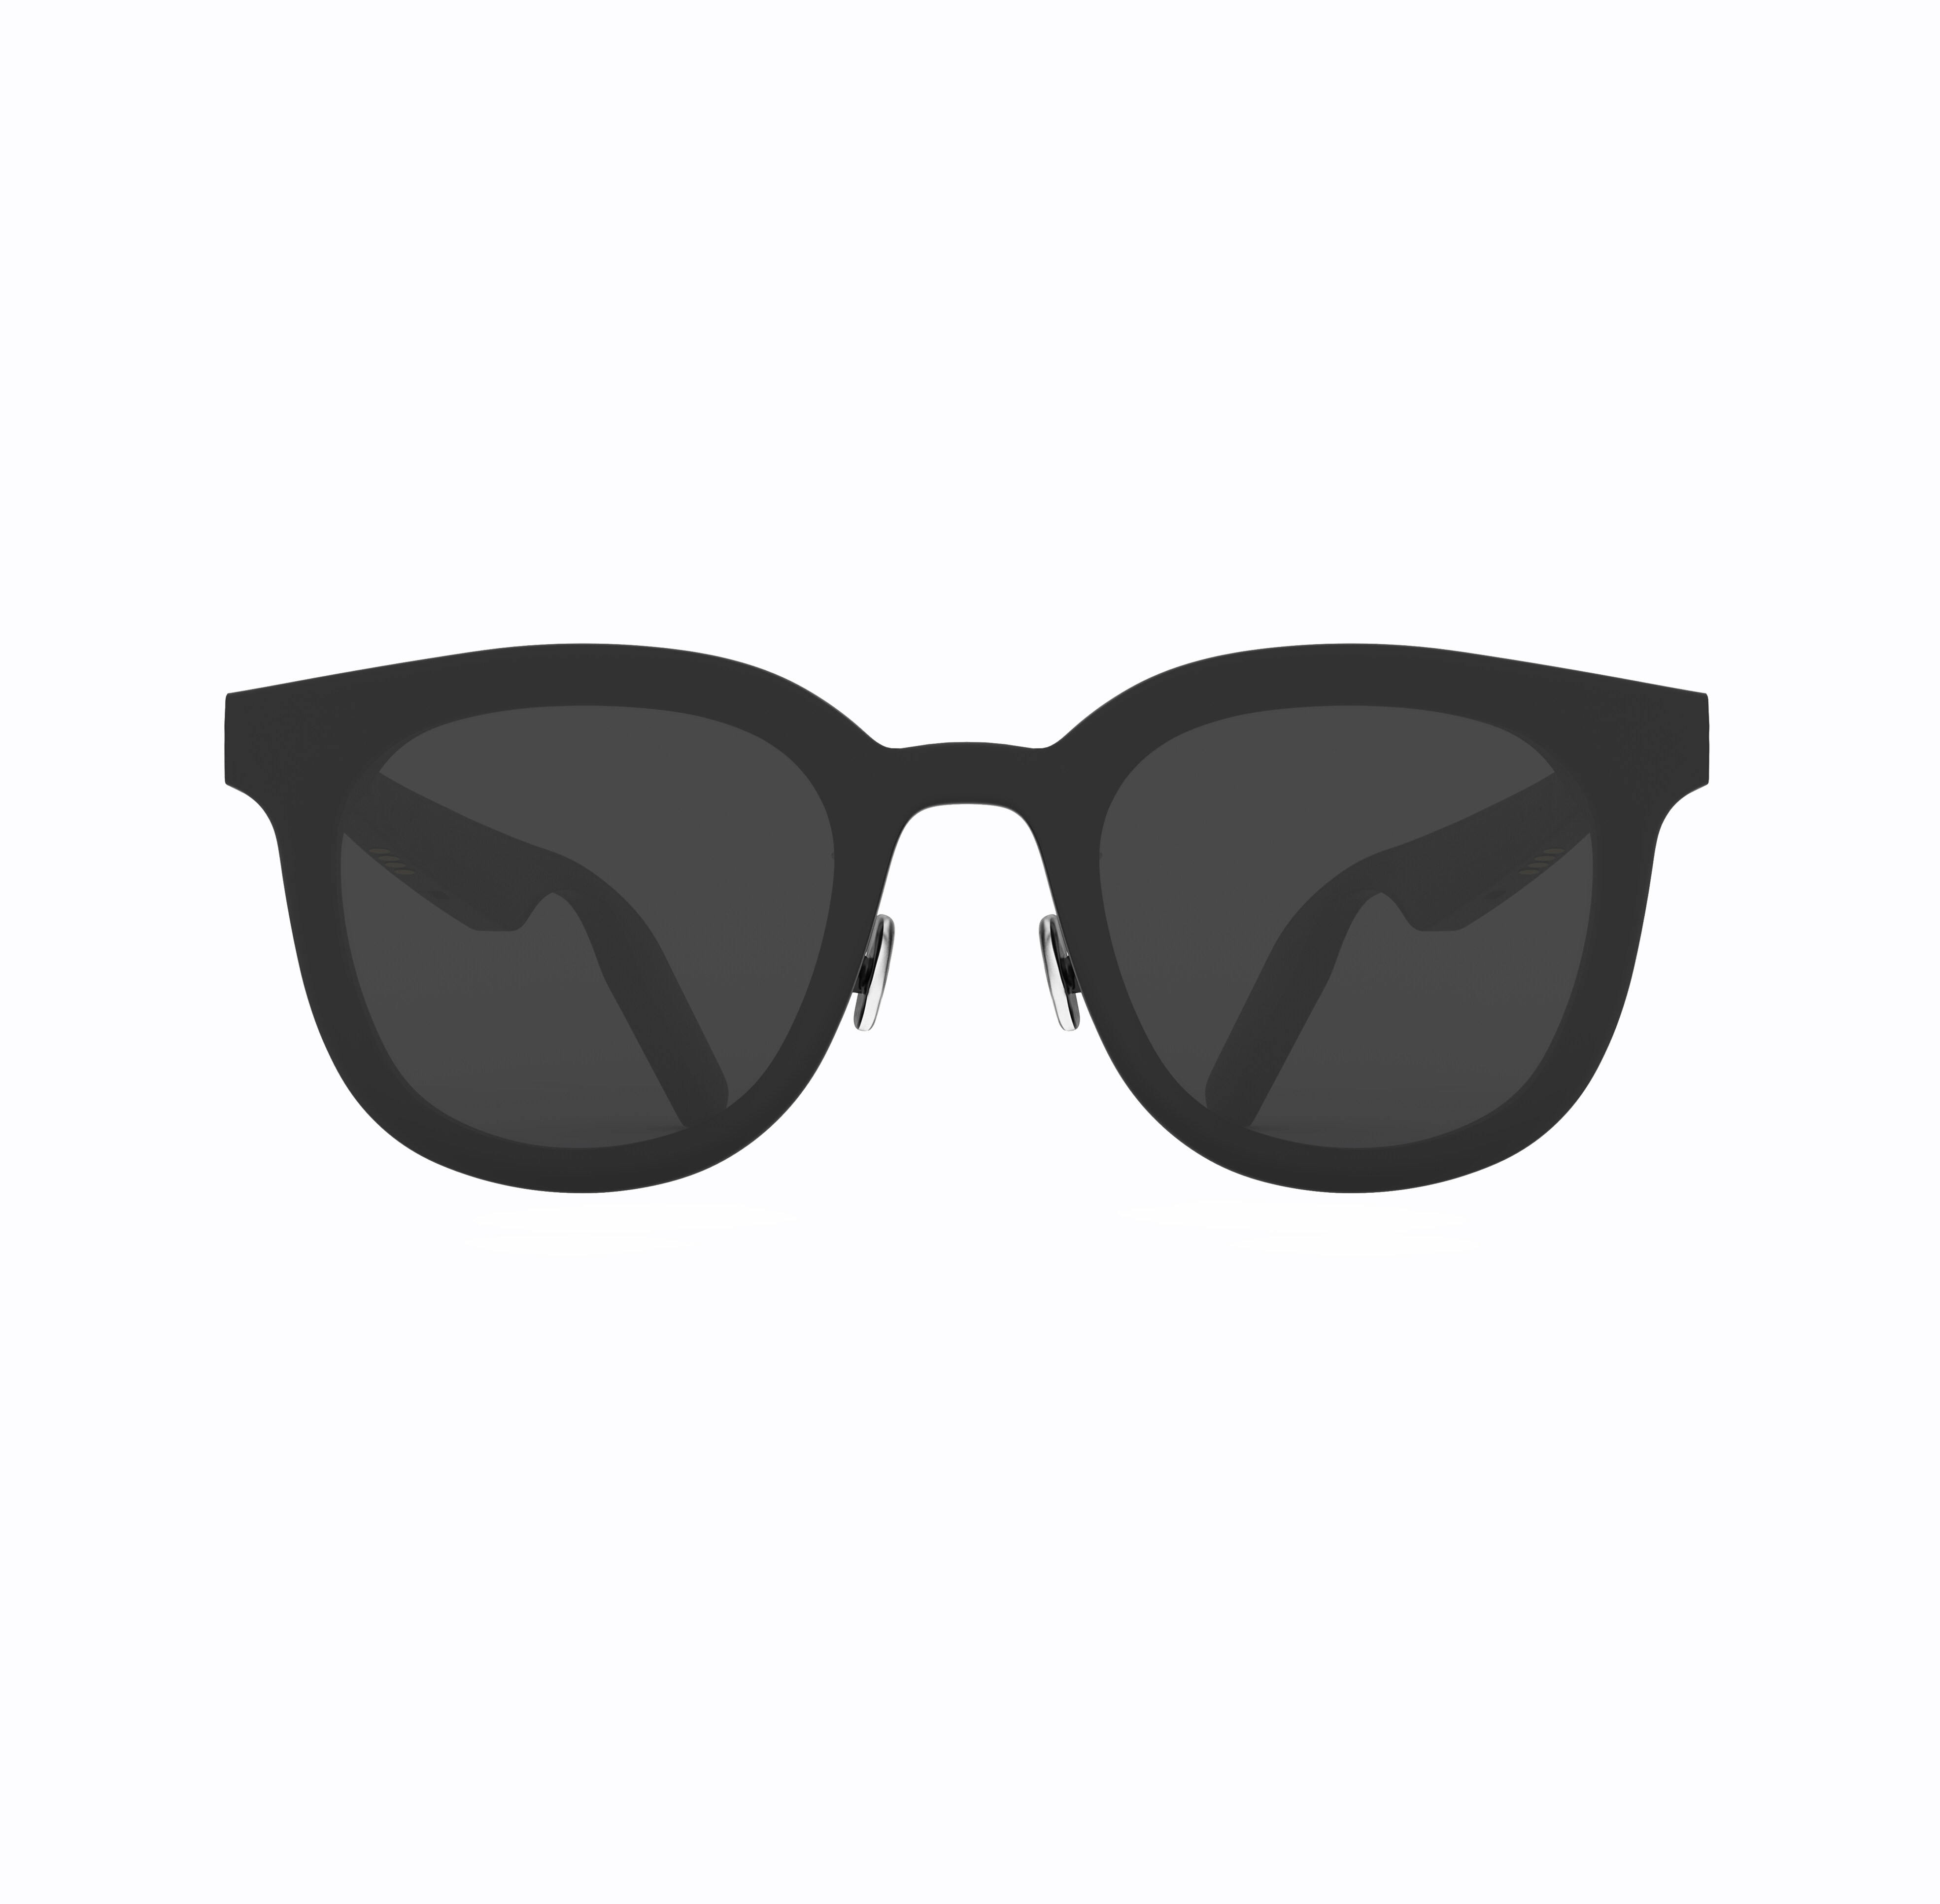 Bluetooth 5.3 Audio Sunglasses Transitional Lens & Polarized Glasses, UV400 Protection